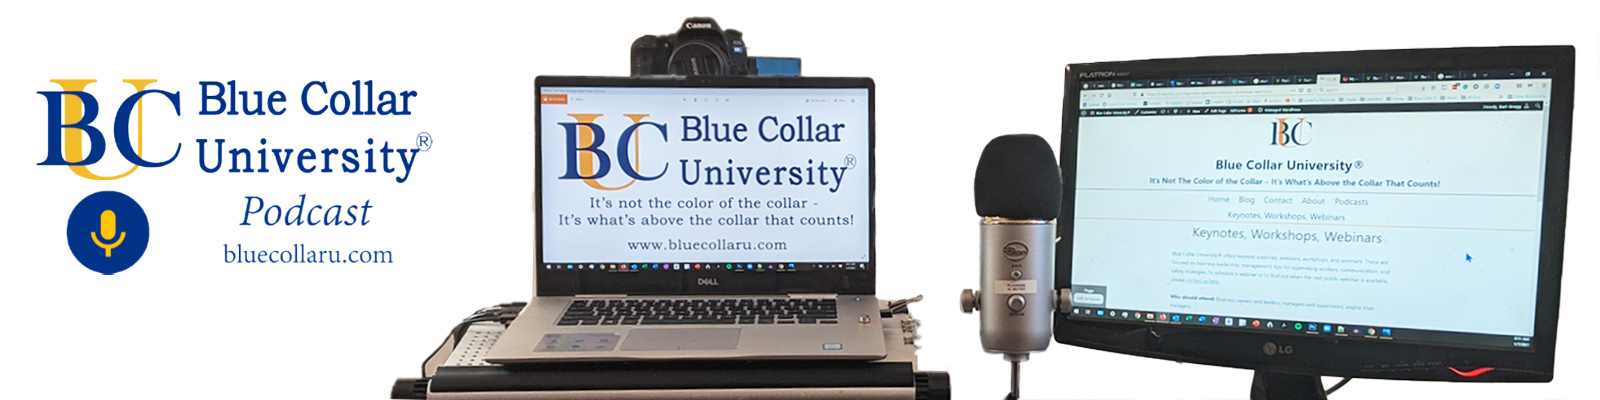 The Blue Collar University Podcast